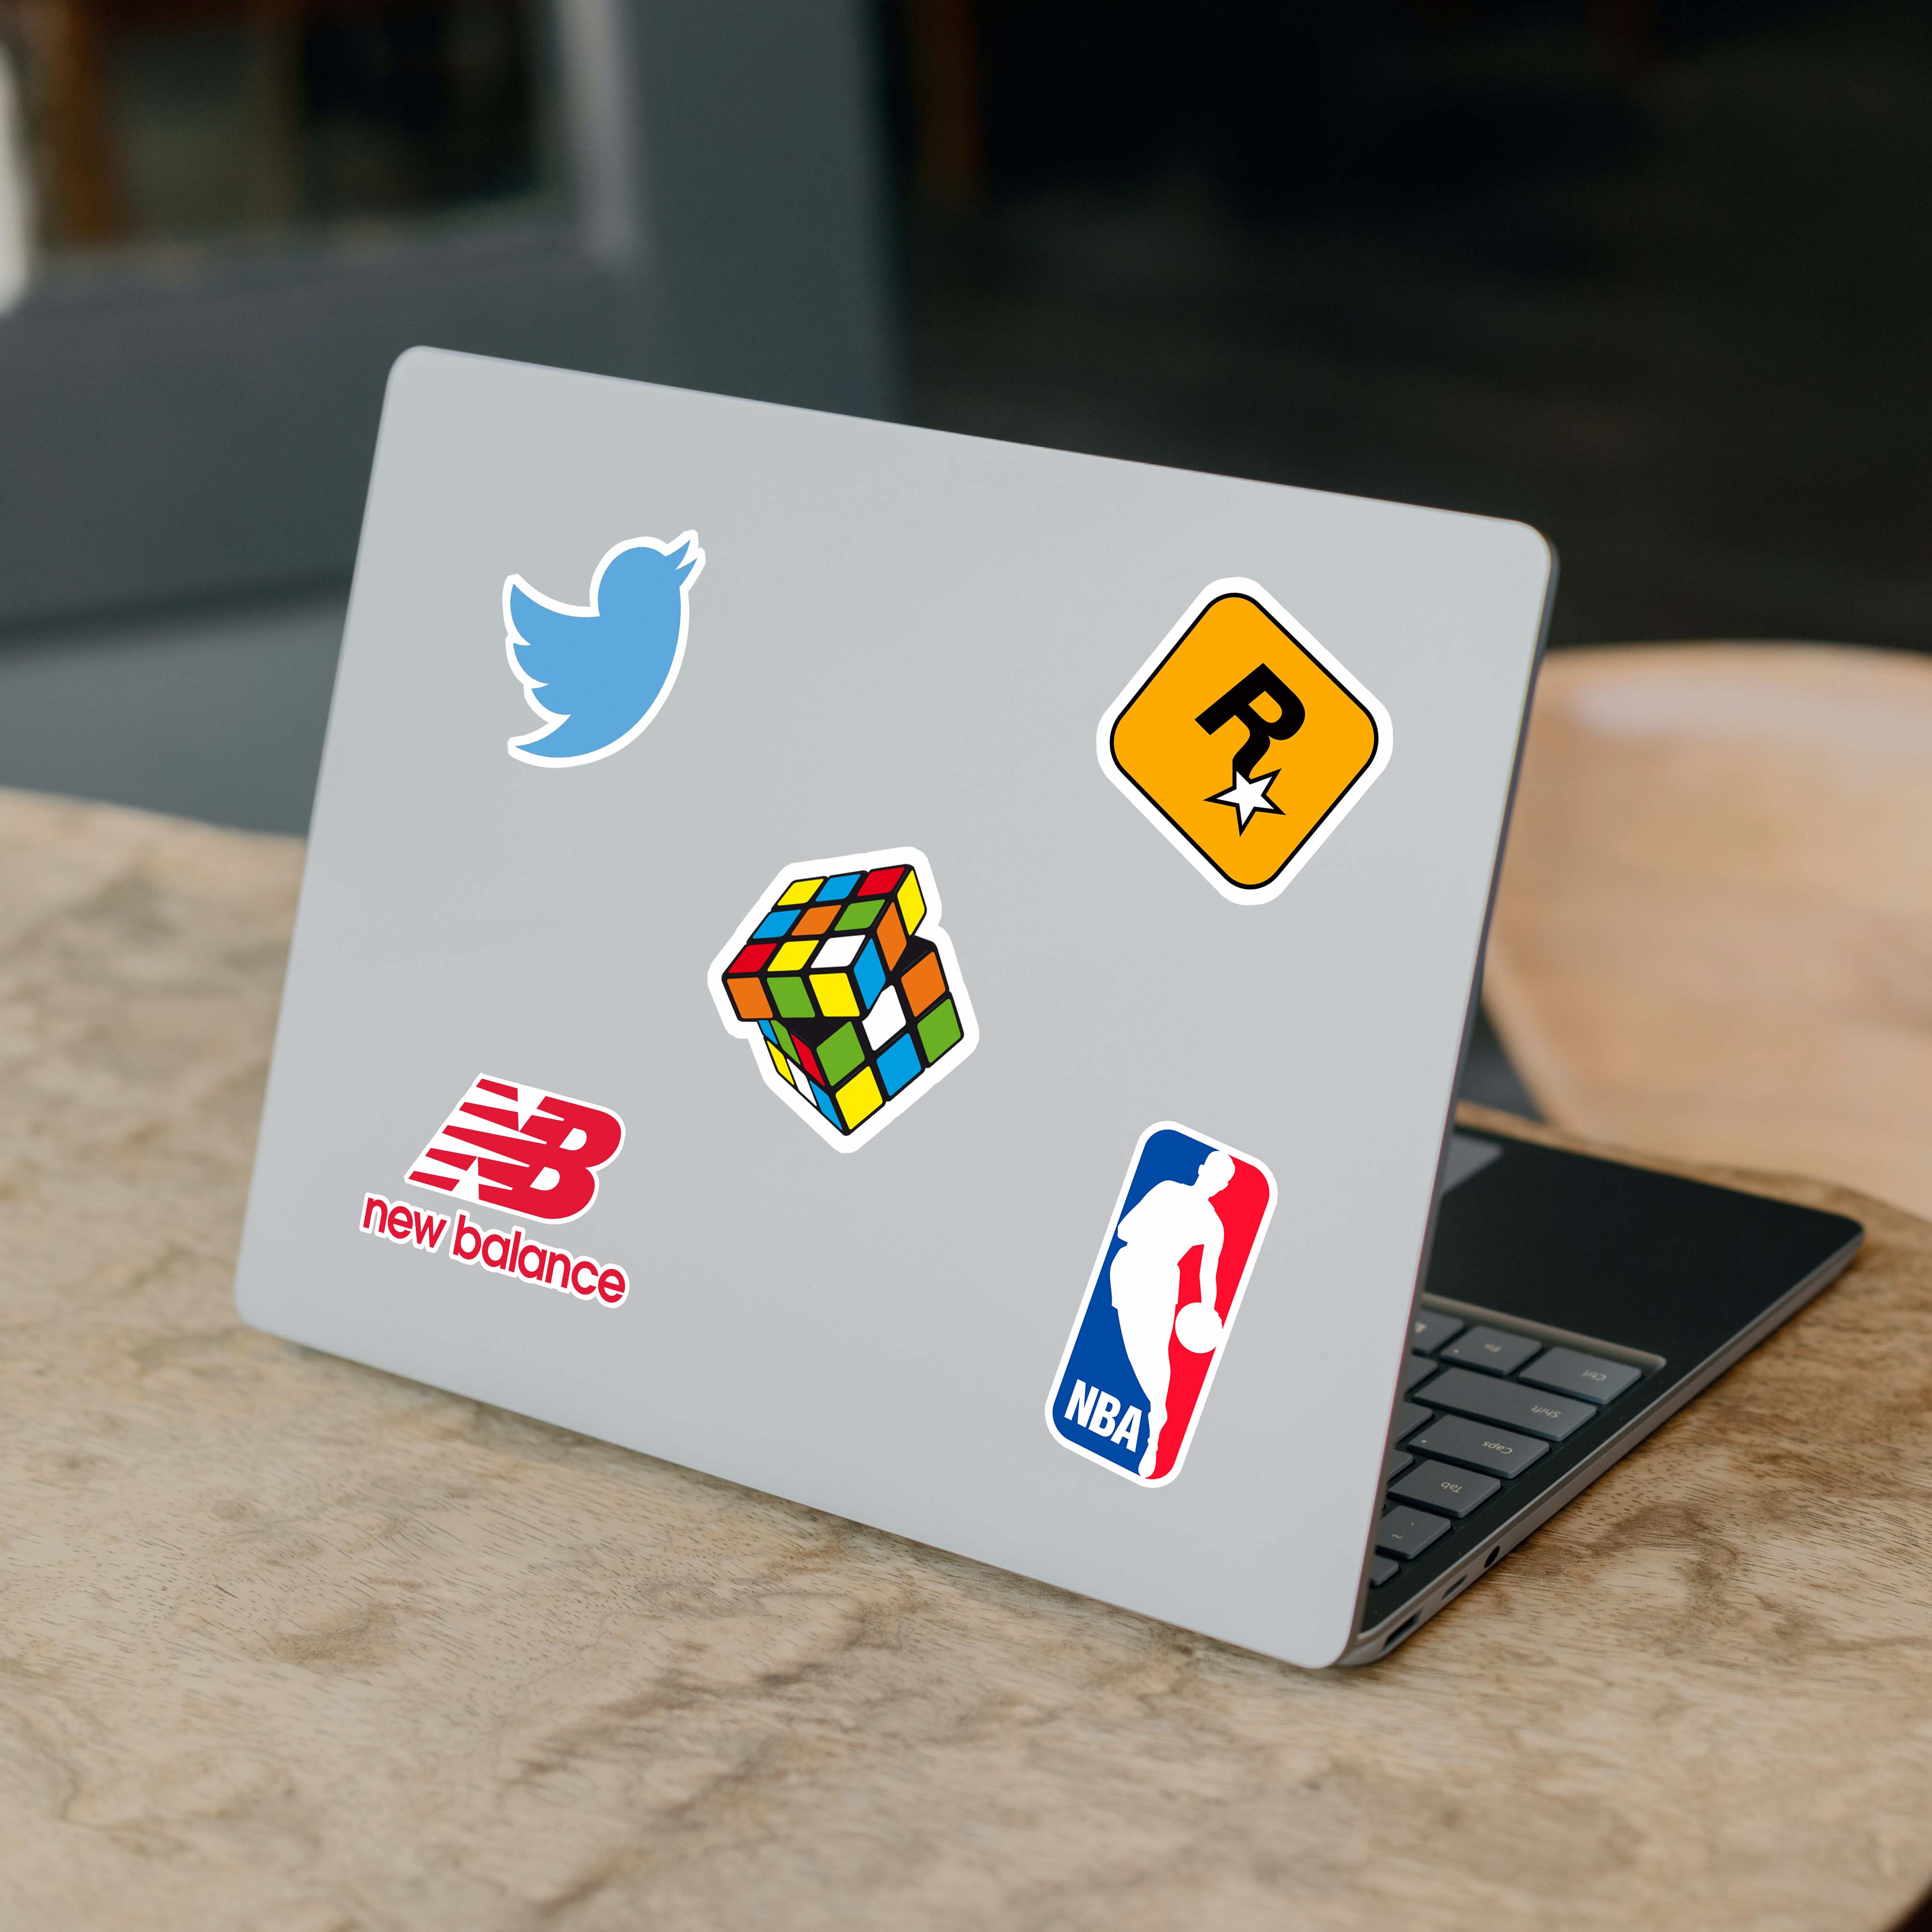 Lap top brands logos. Collection of laptop brand logos , #SPONSORED, #brands,  #top, #Lap, #logos, #brand #ad | Top brands logo, Clothing brand logos,  Popular logos